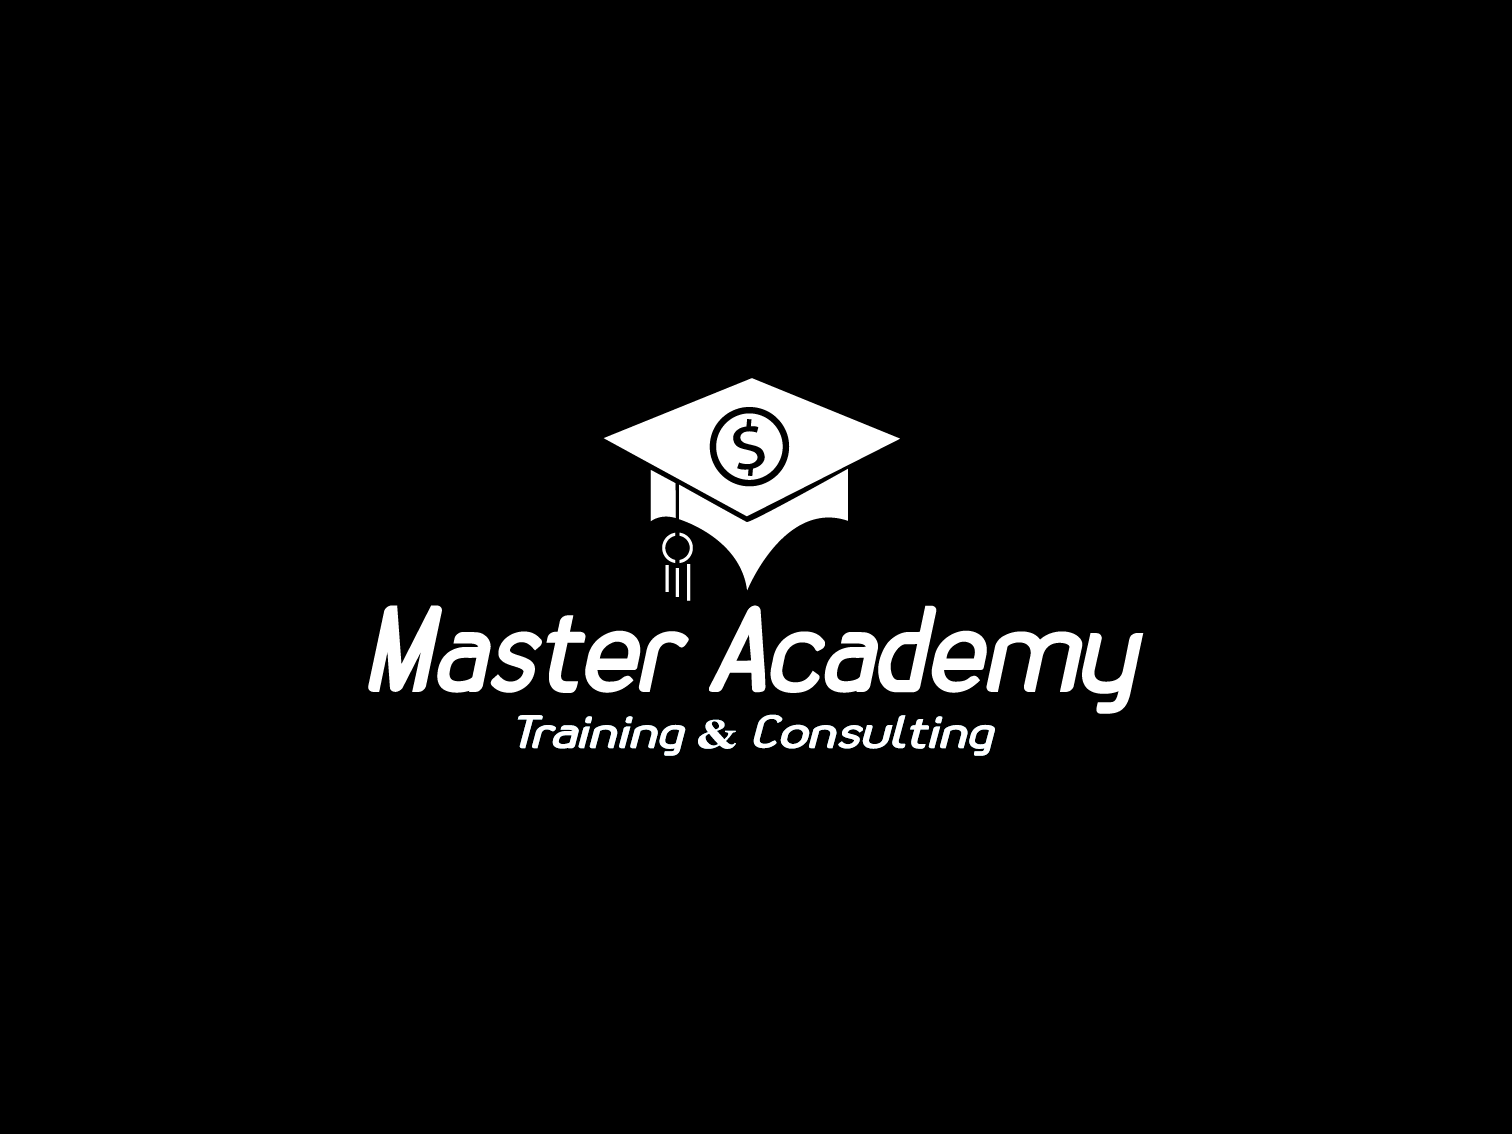 master-academy-logo-by-kareem-wahman-on-dribbble